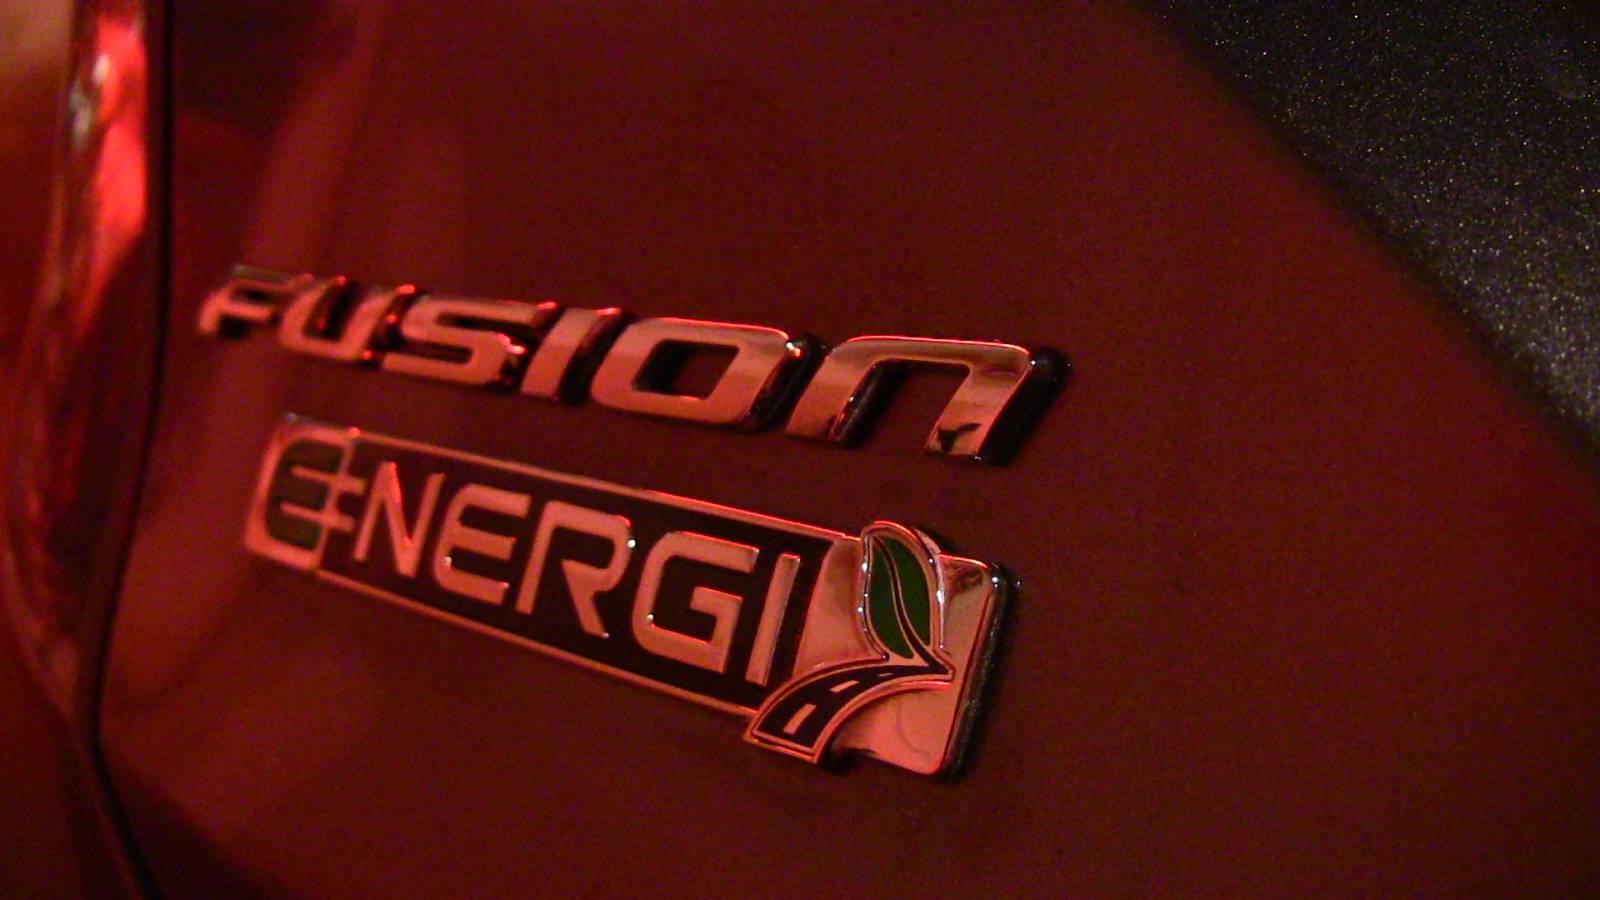 Fusion Energi Badge at night